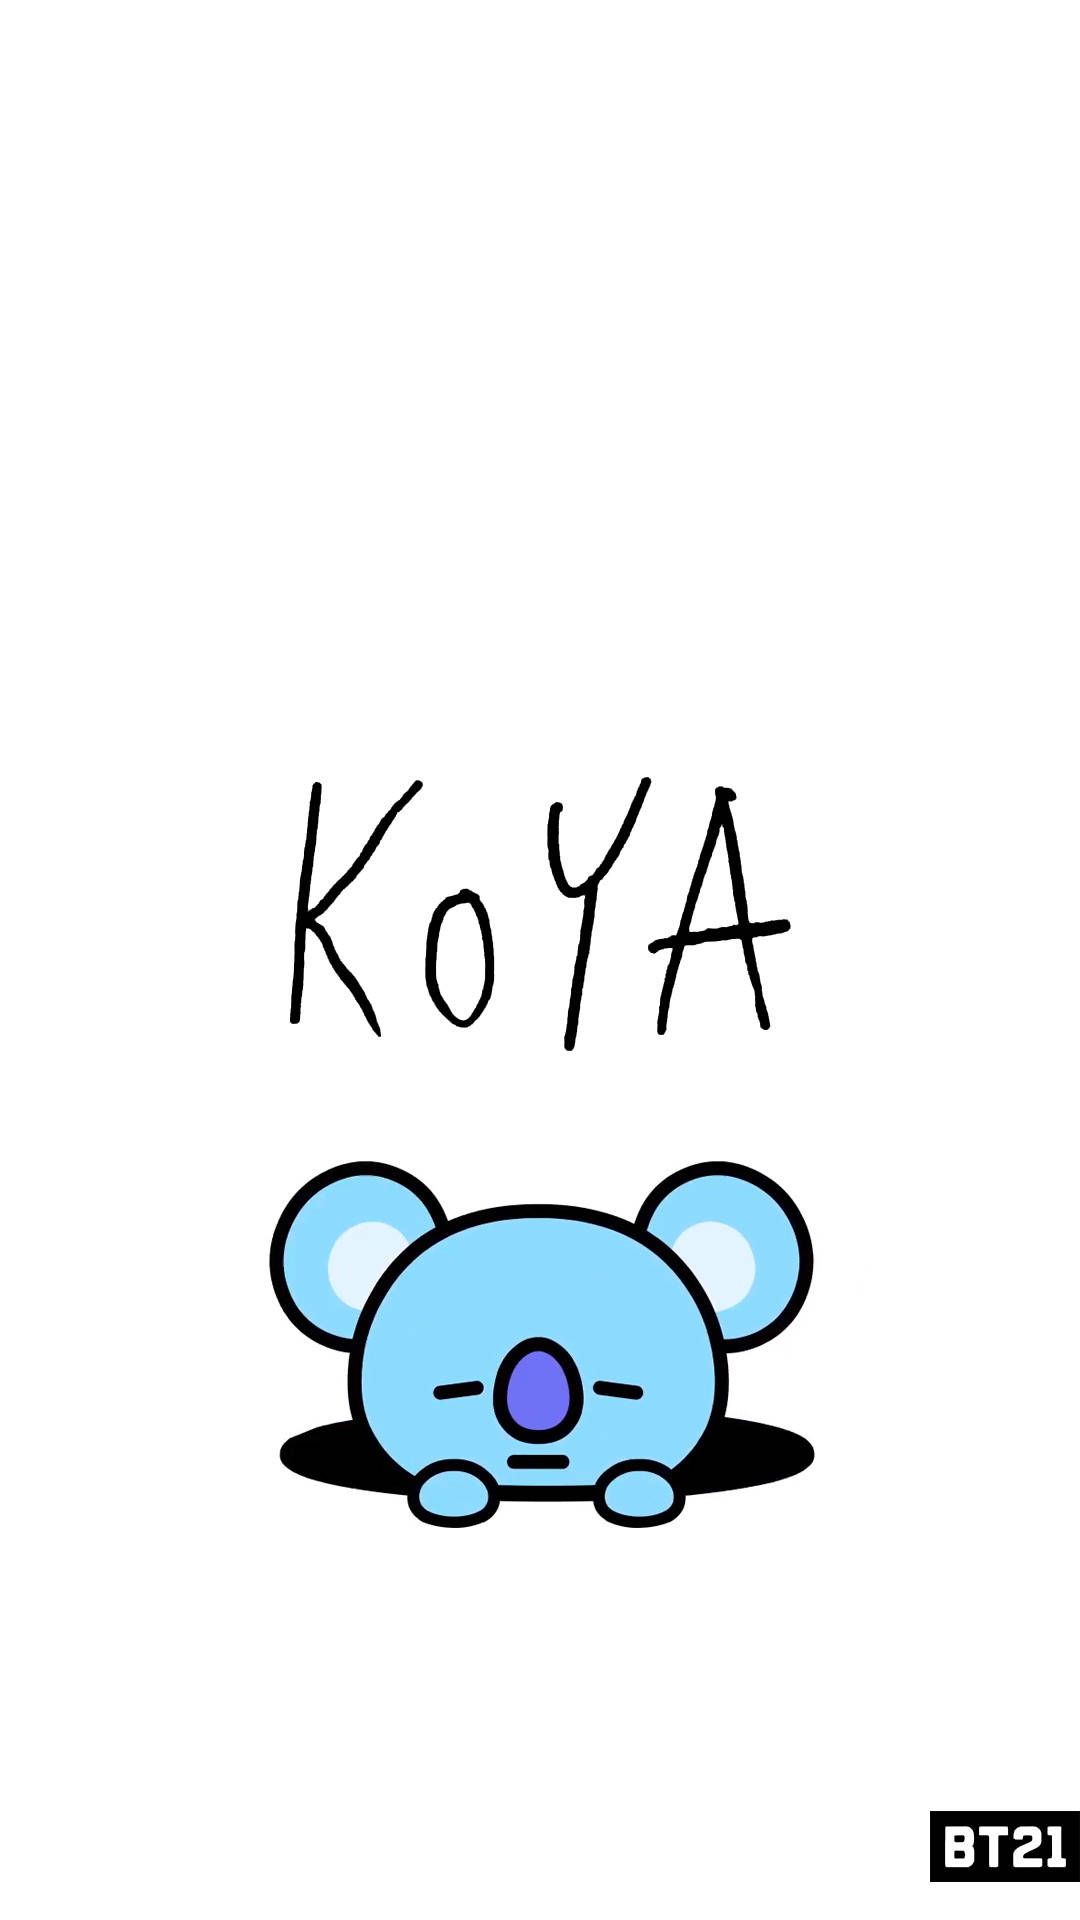 Free Koya Bt21 Wallpaper Downloads, Koya Bt21 Wallpaper for FREE